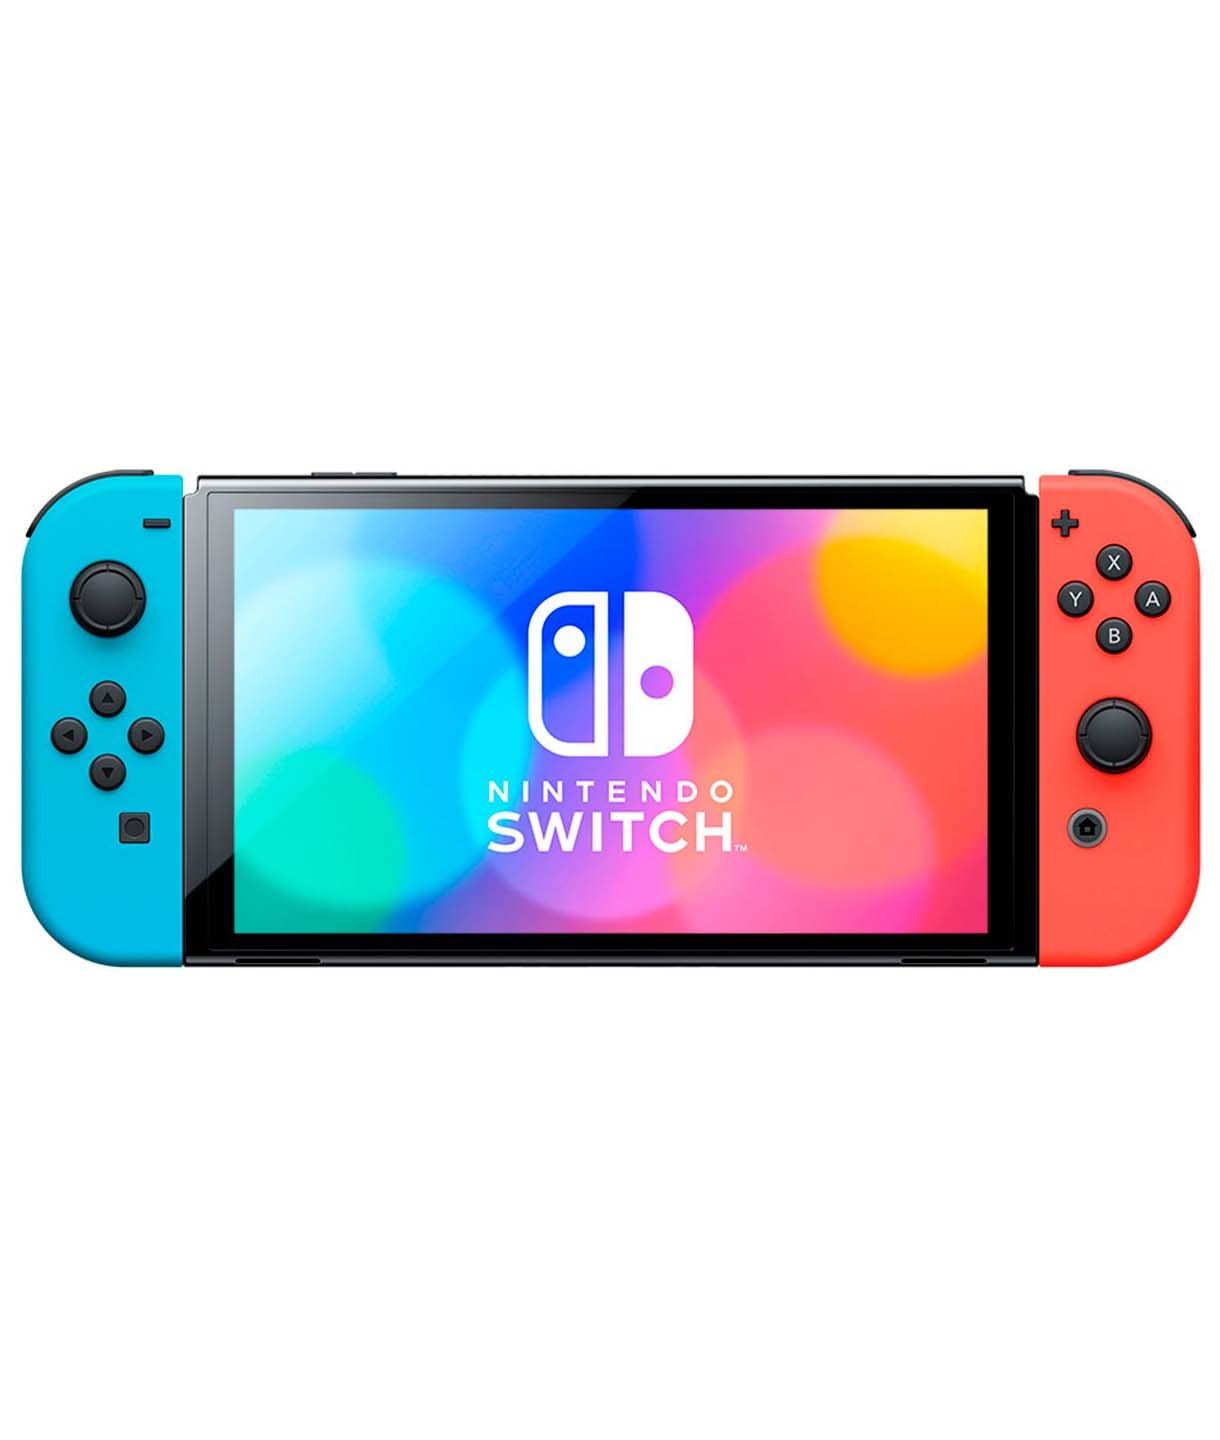 Máy Chơi Game Nintendo Switch Oled Model Neon 2